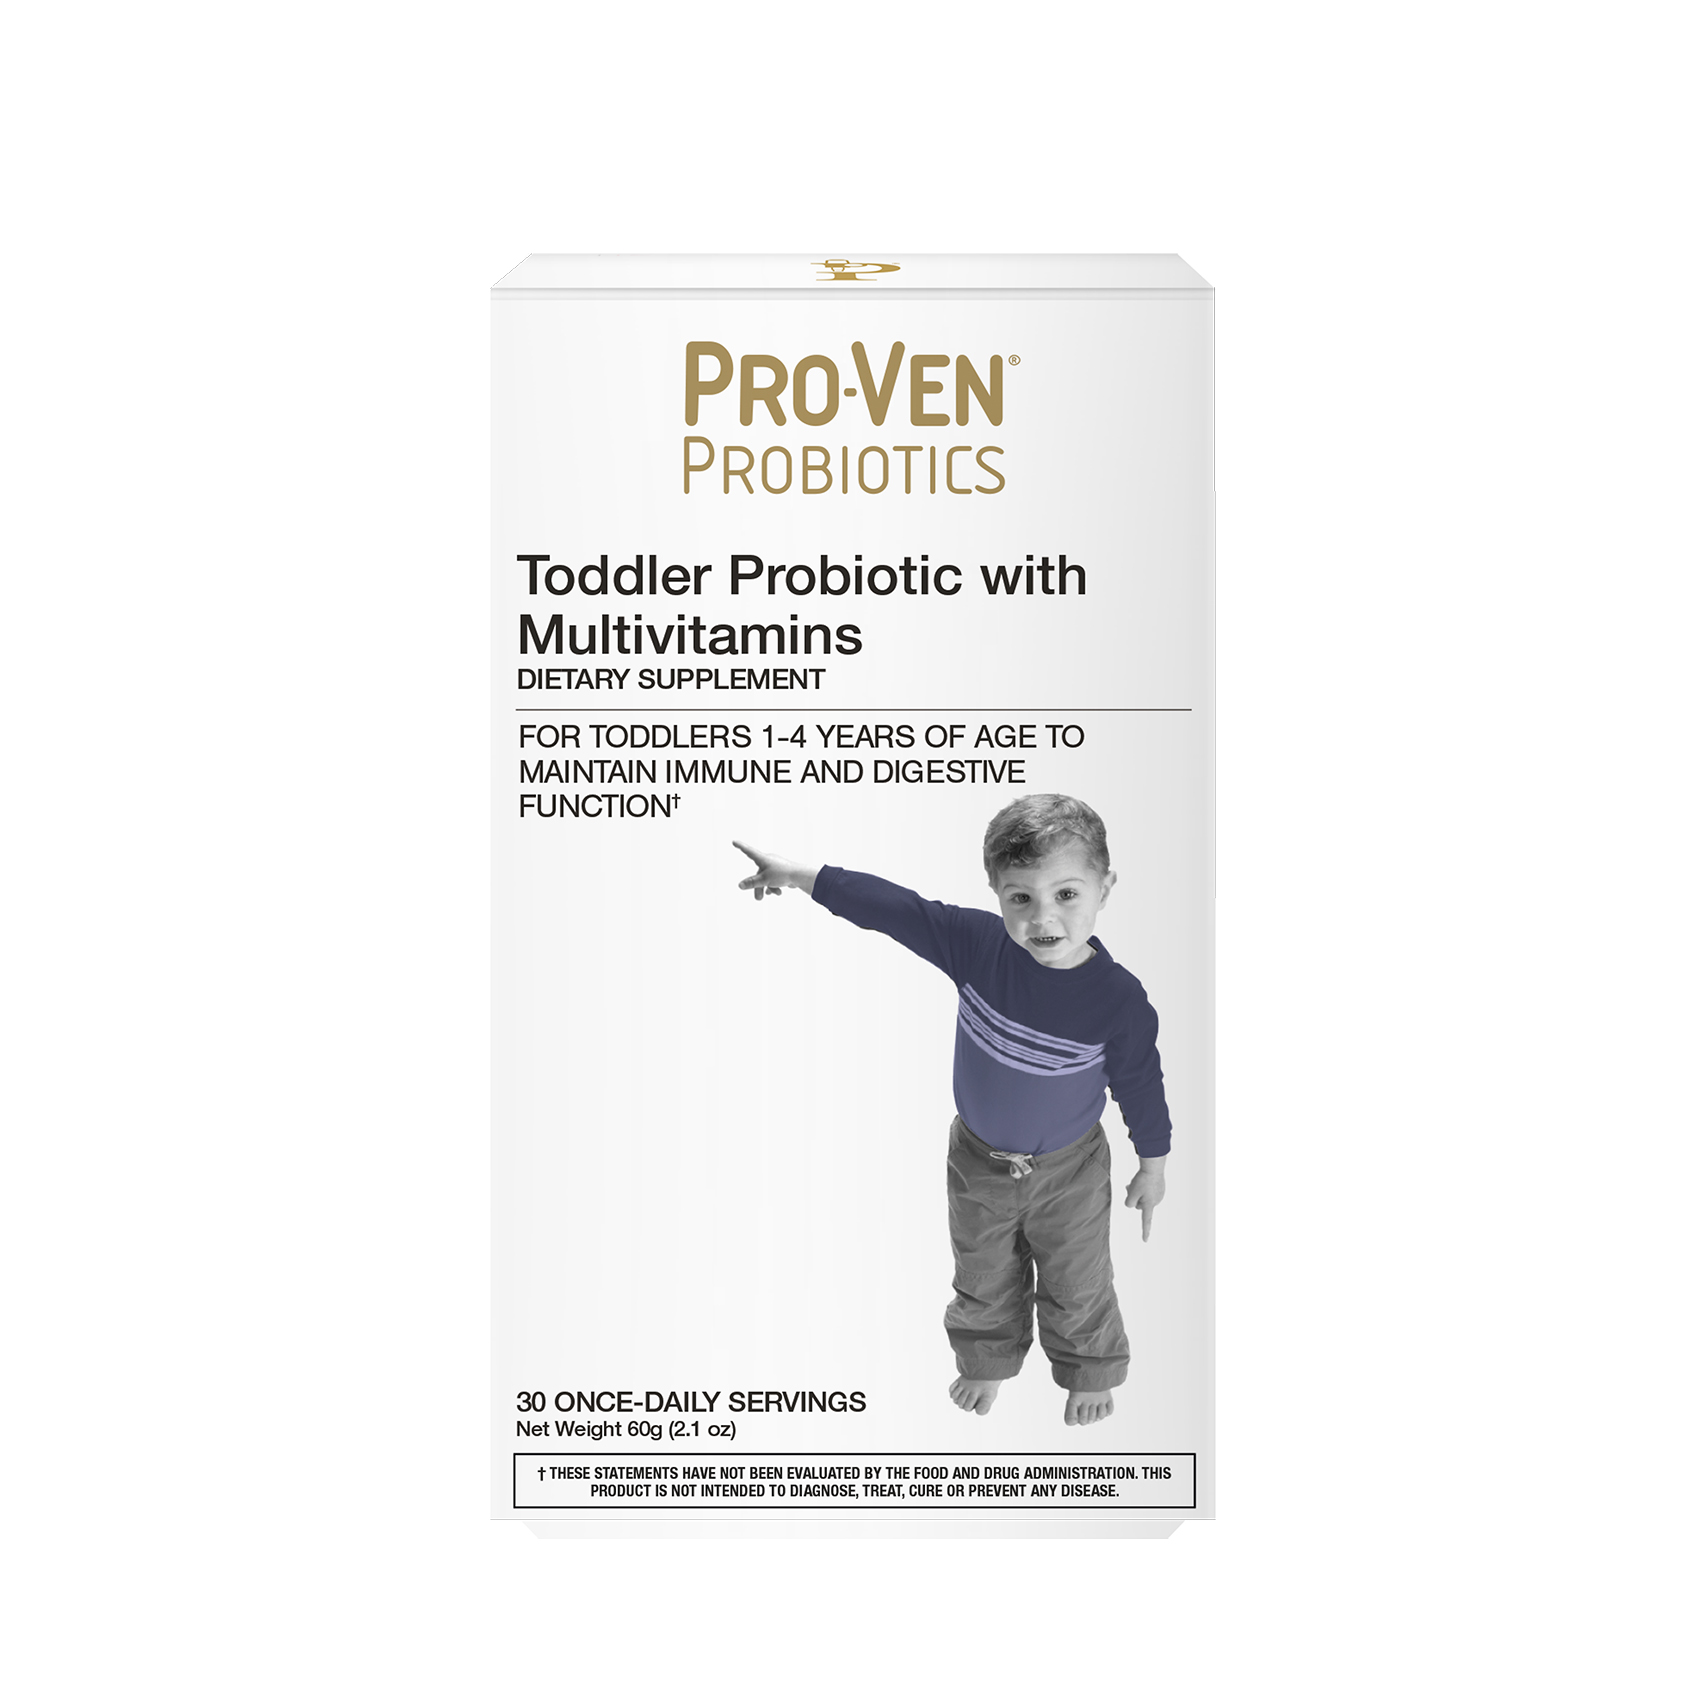 https://provenprobiotics.co/wp-content/uploads/2022/02/toddler-product-image-copy.jpg